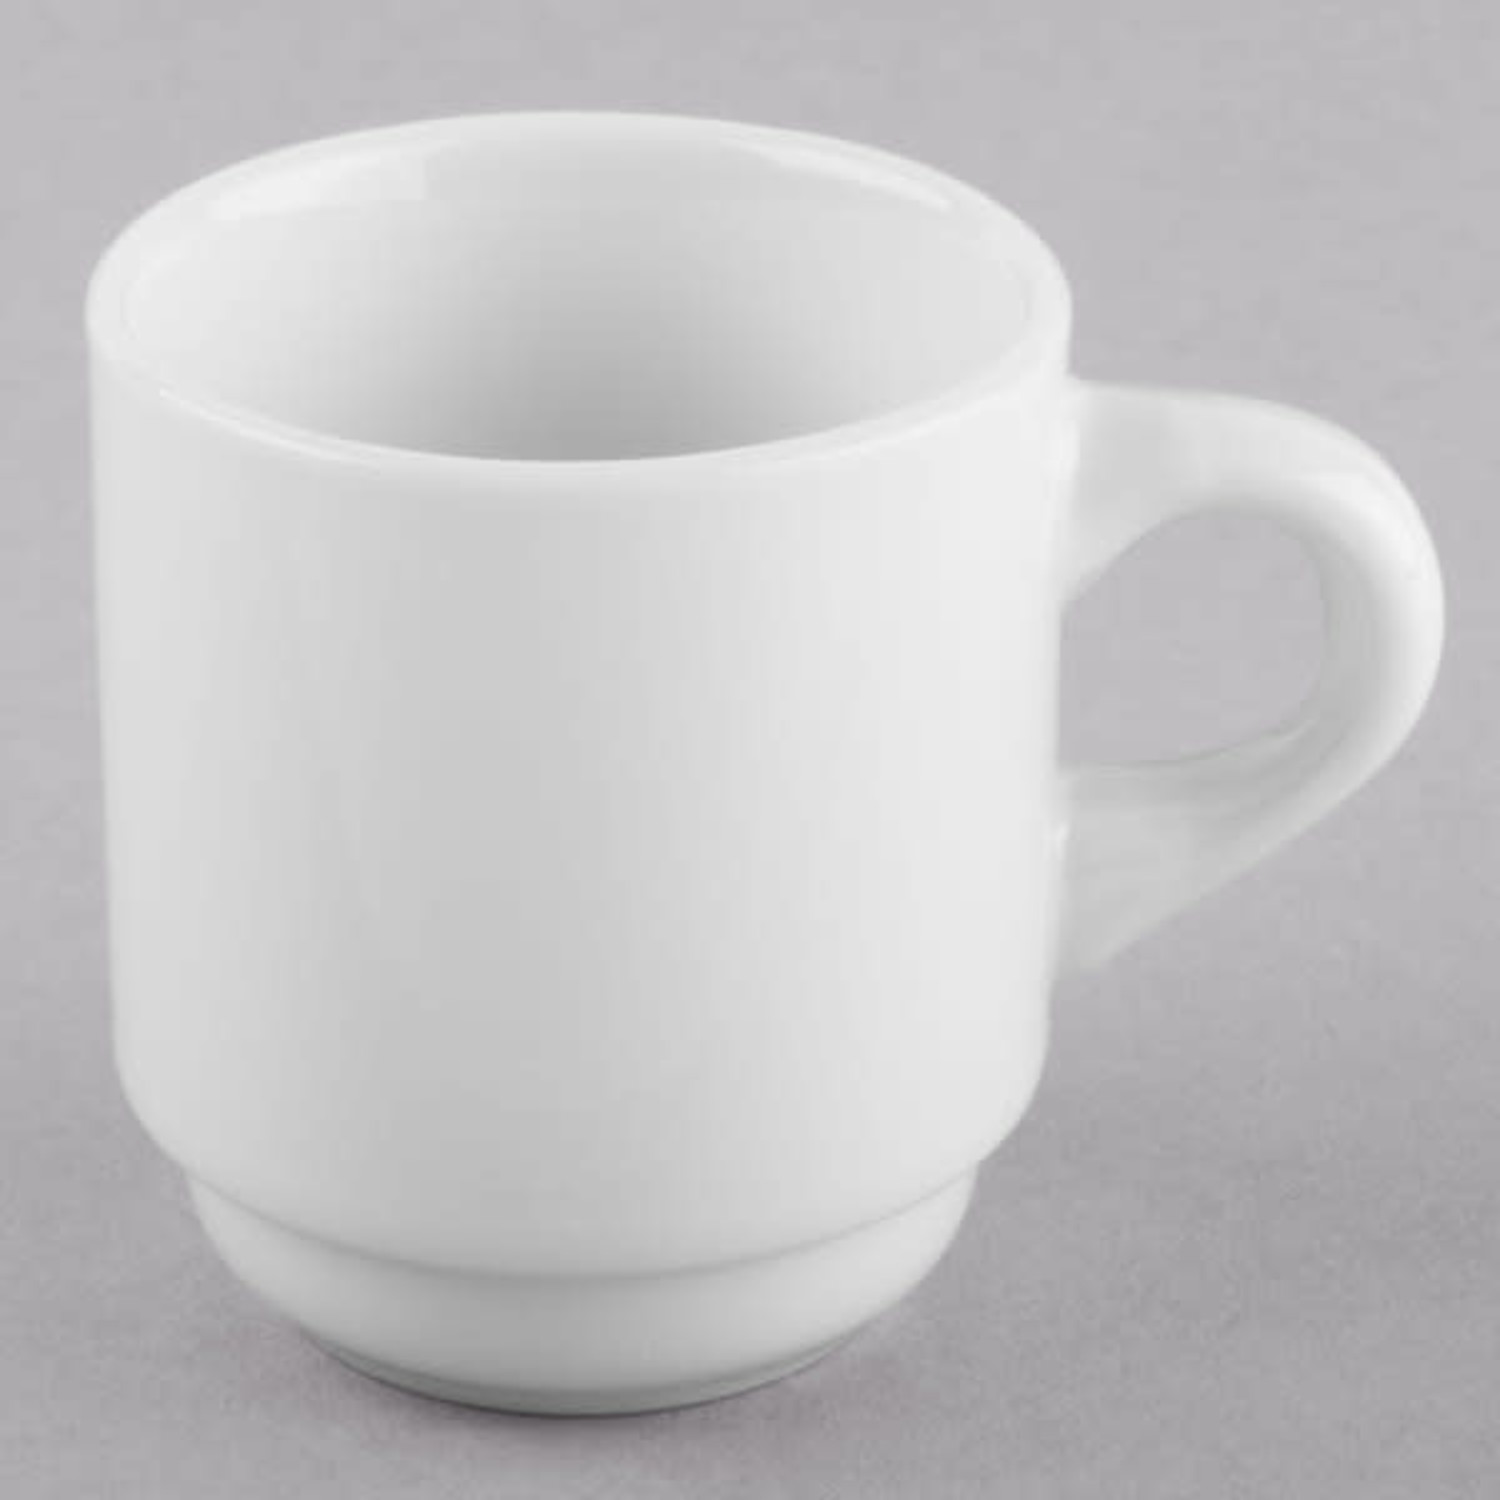 Oneida L5800000525 3.5 oz Verge Porcelain Espresso Verge Cups, White